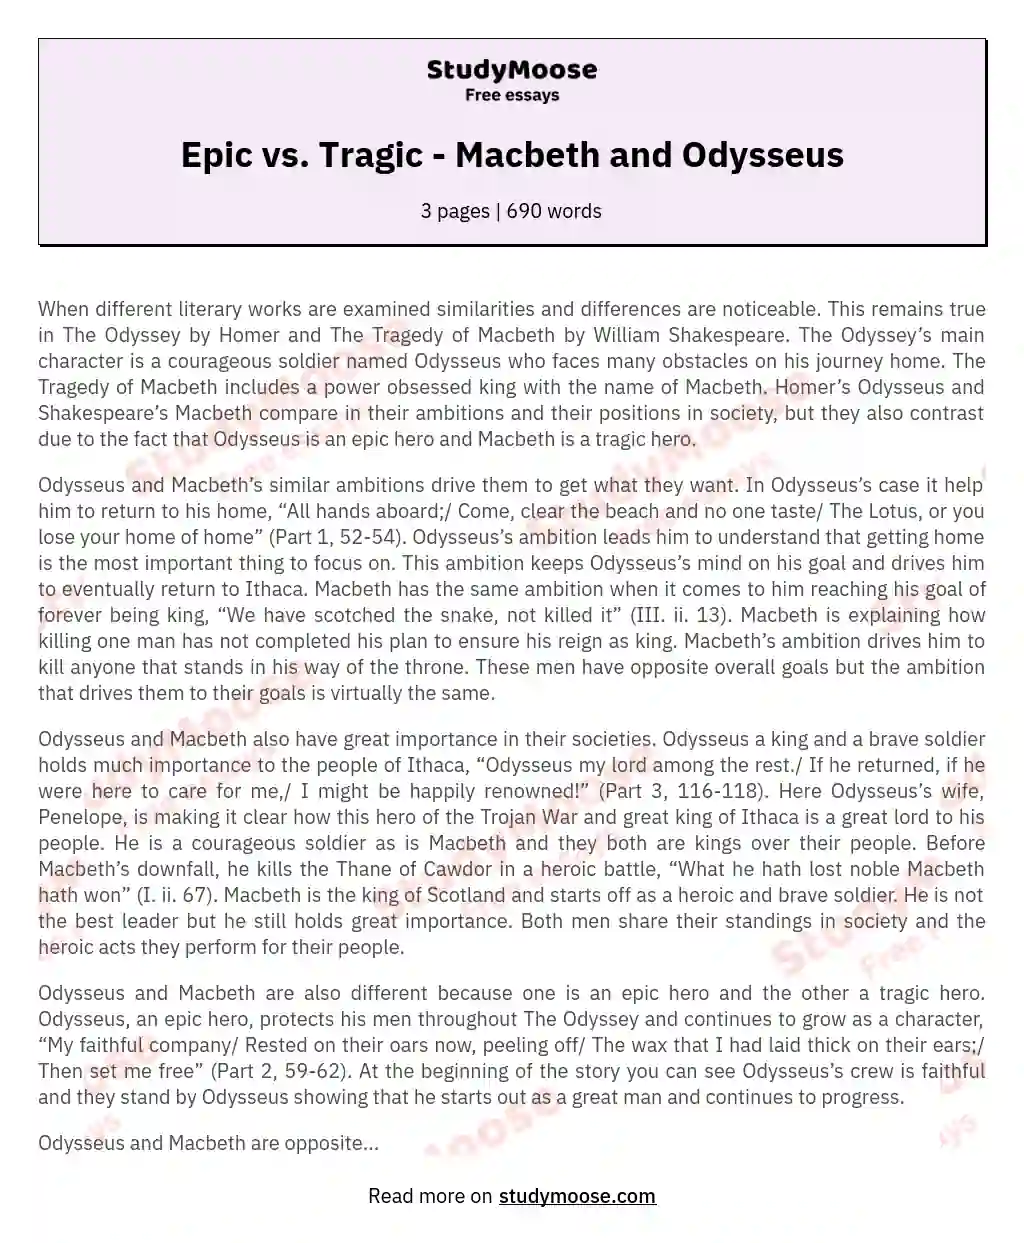 Epic vs. Tragic - Macbeth and Odysseus essay